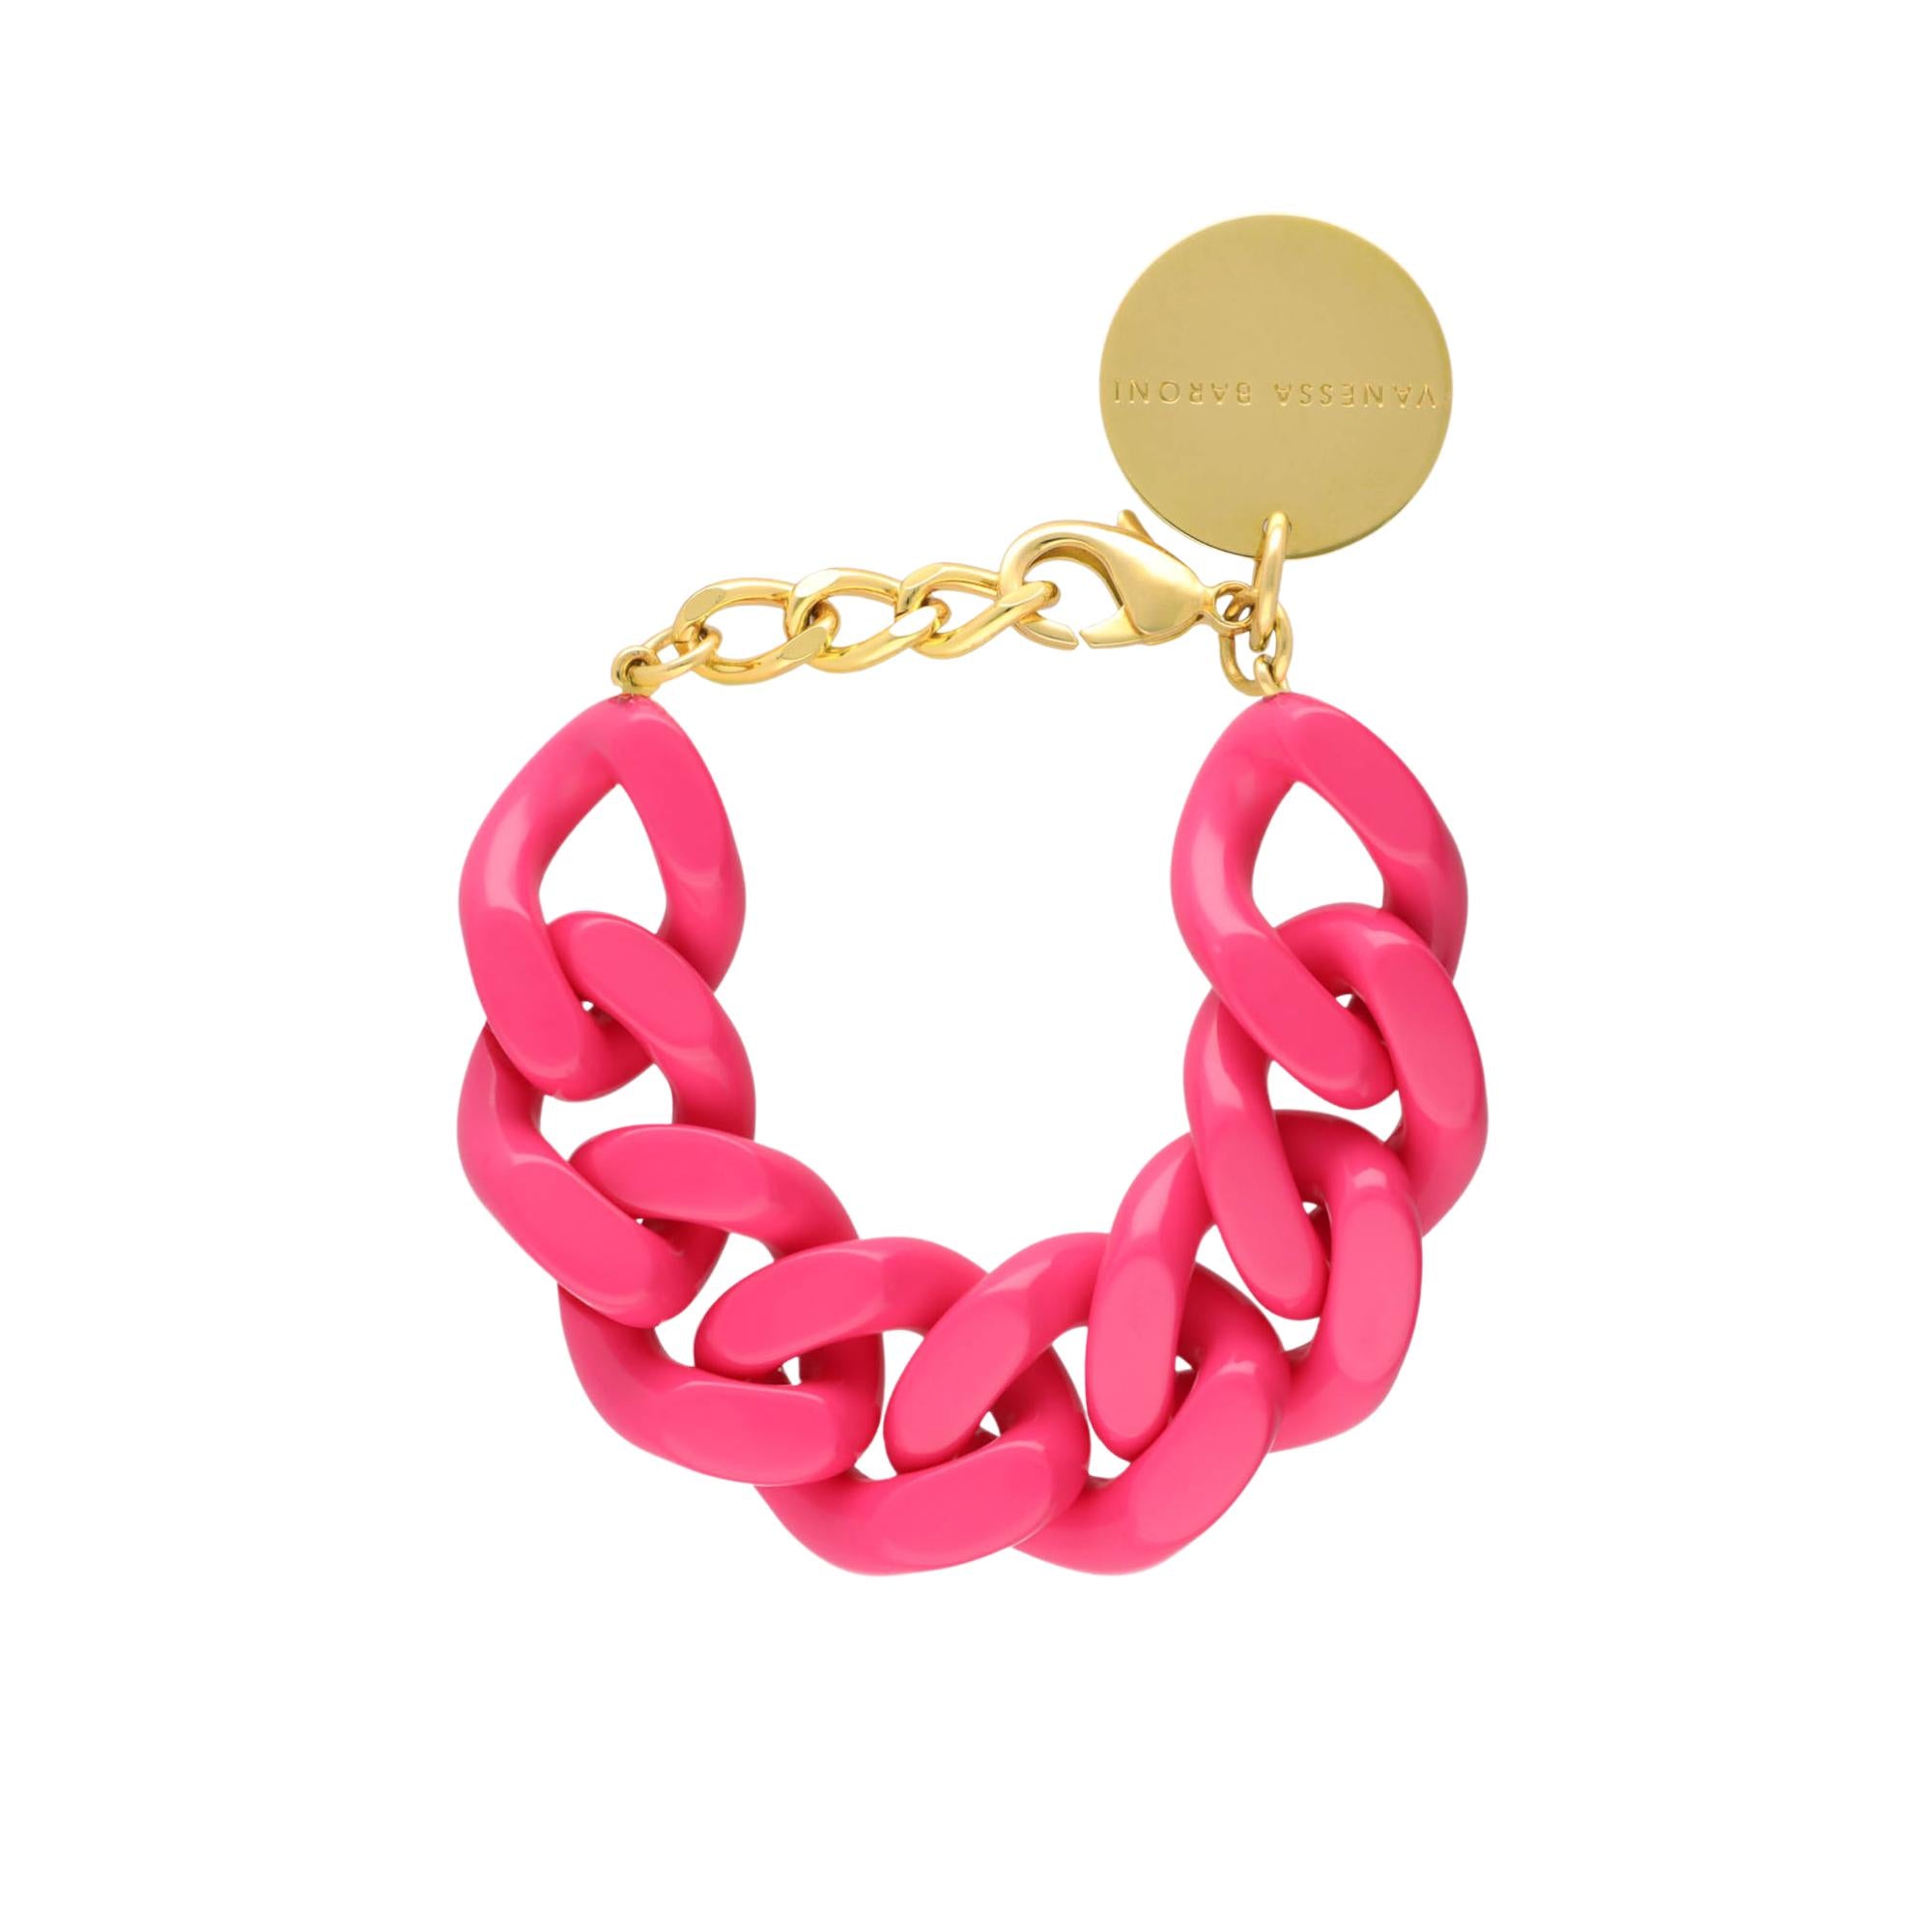 Hot Pink Chain Bracelet